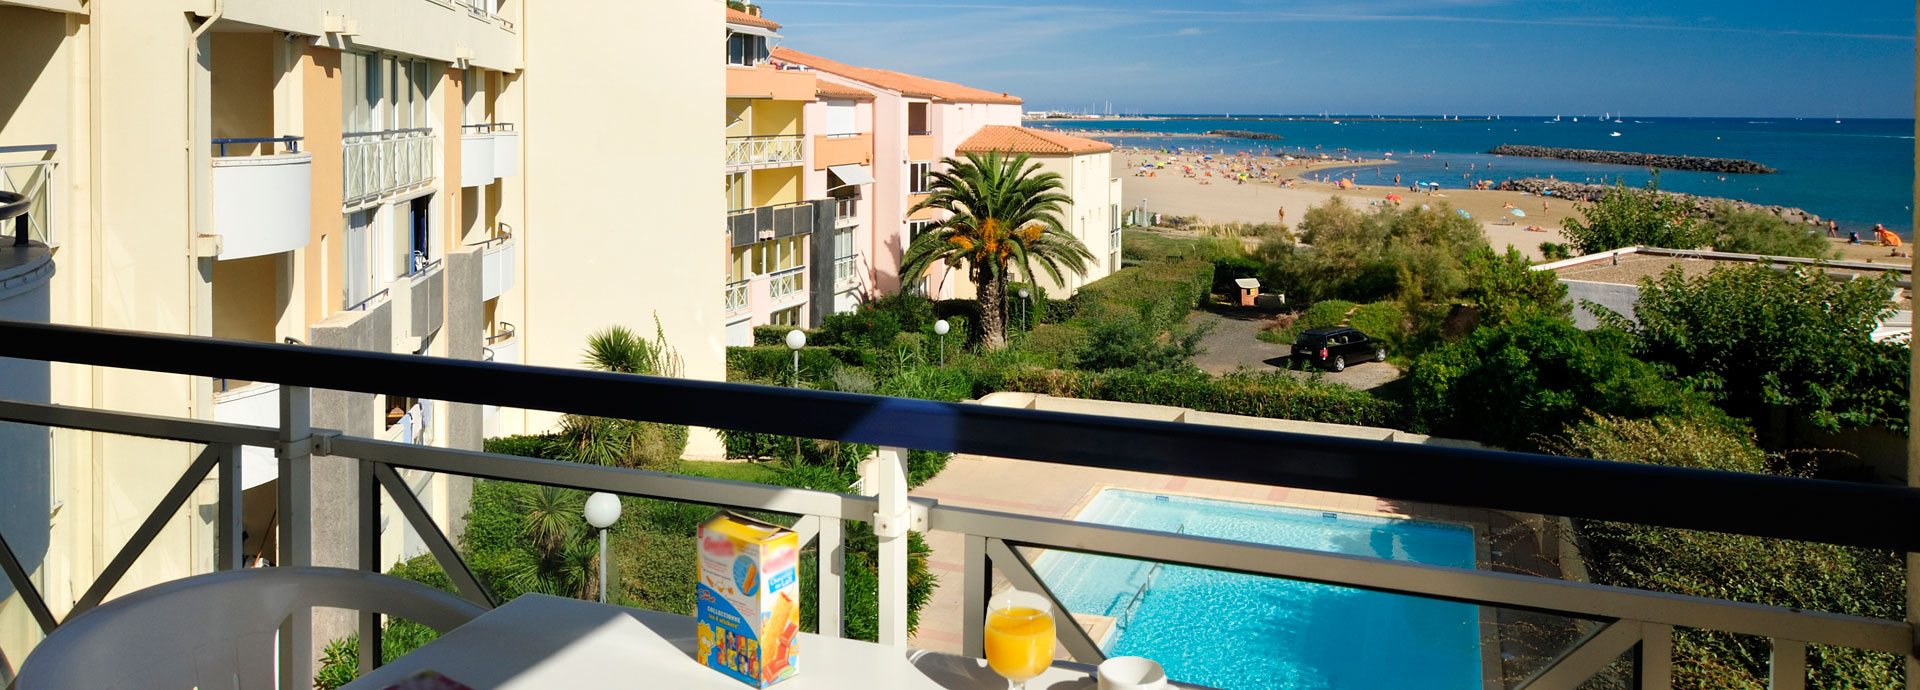 Holiday rental at Cap d'Agde : Savanna Beach residence